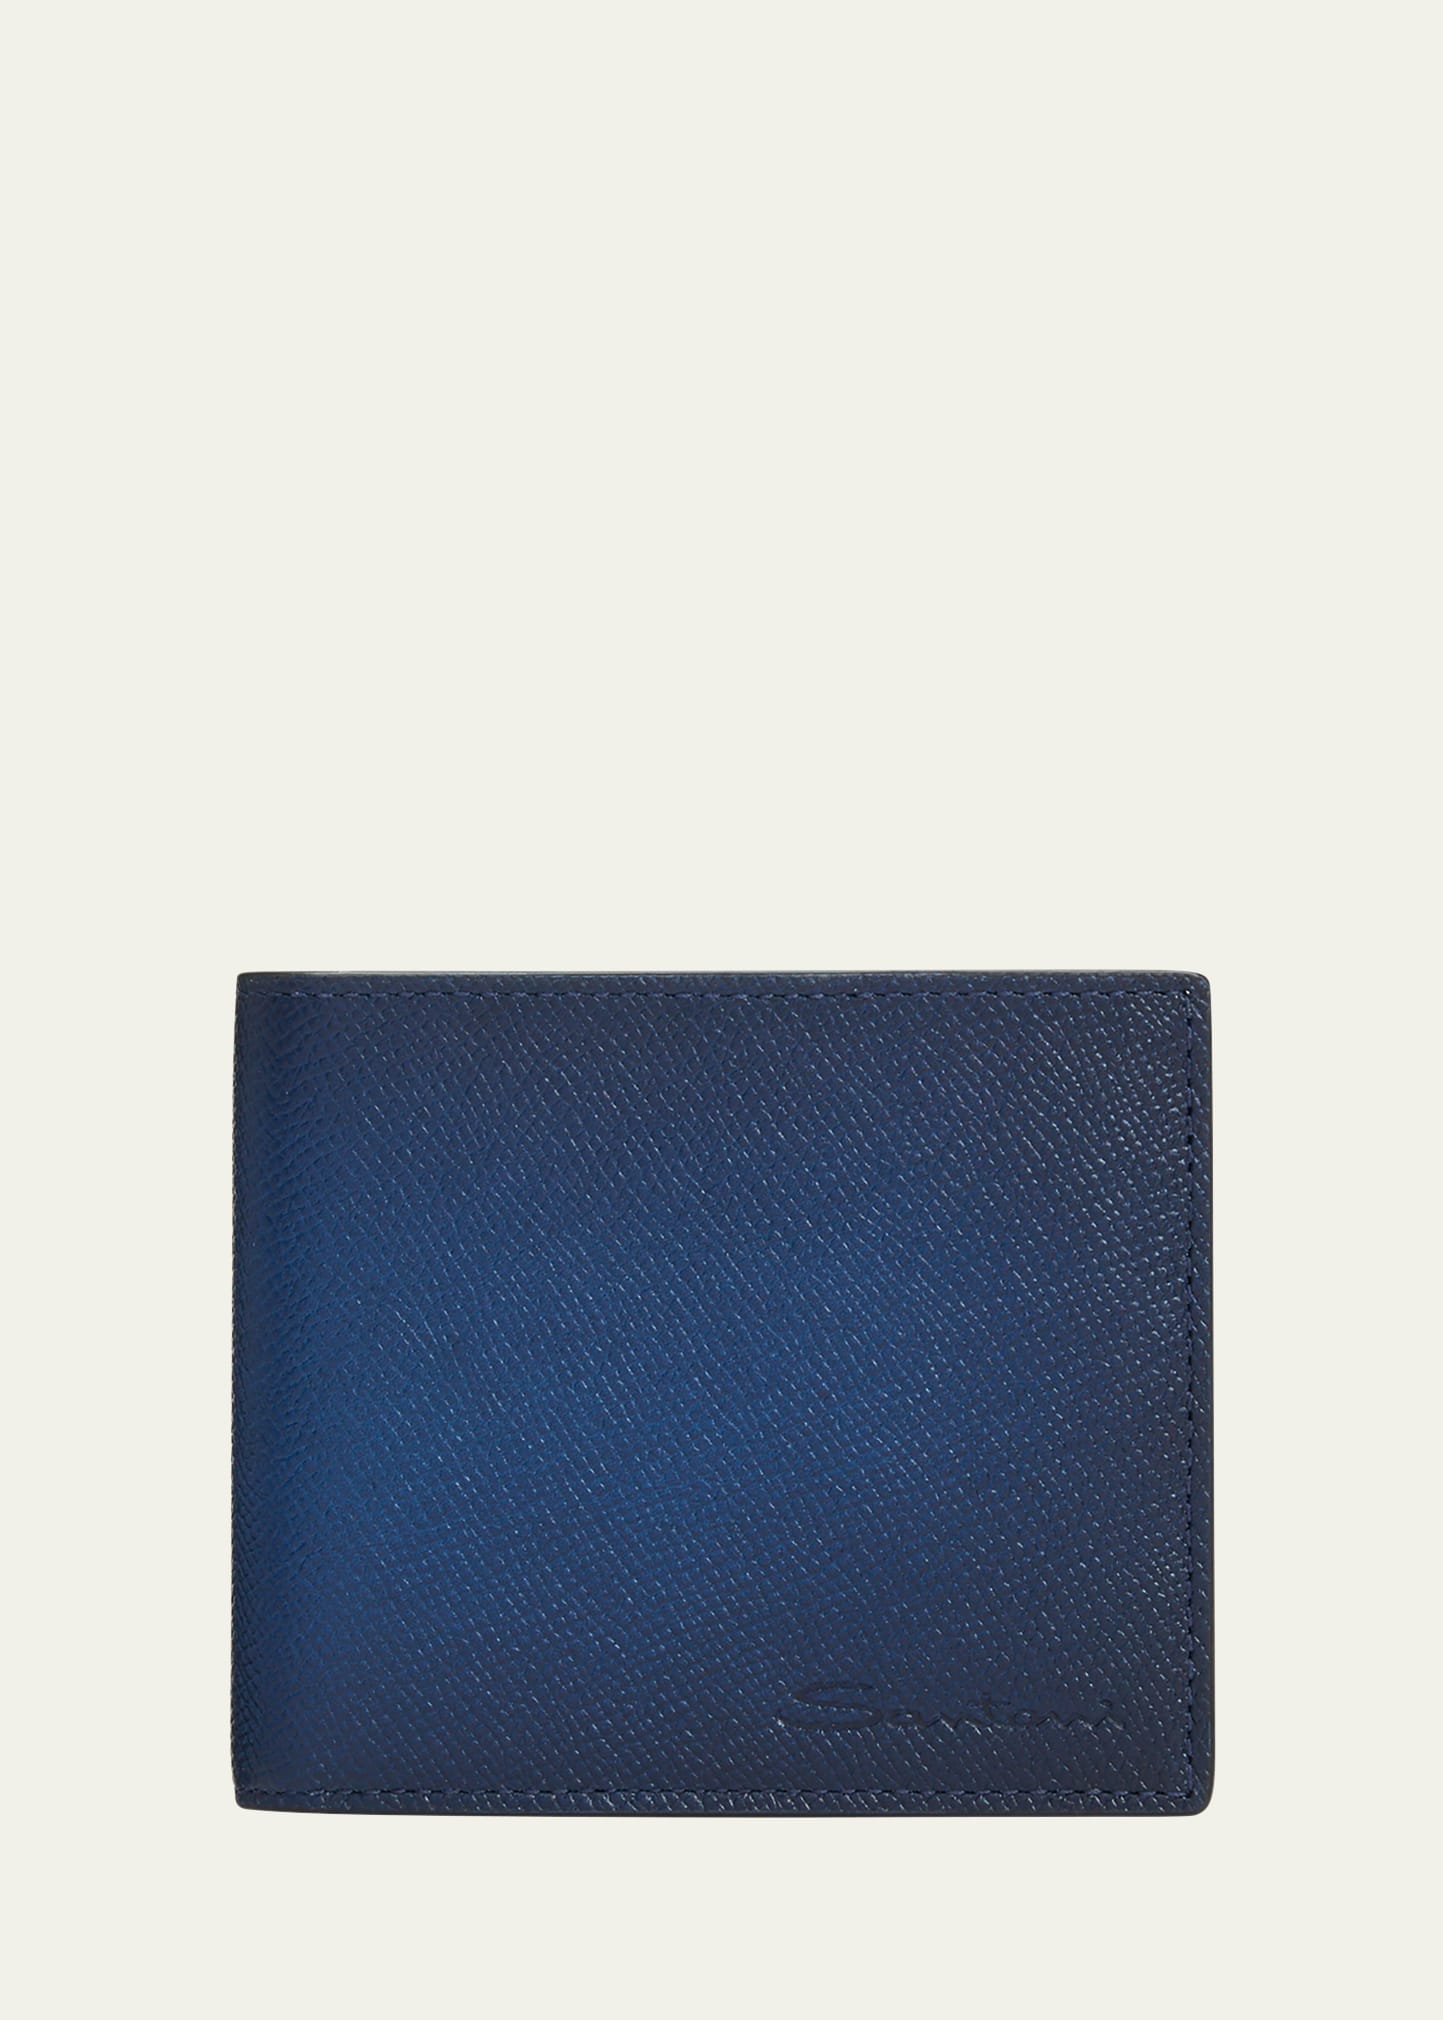 Prada - Men's Saffiano Leather Wallet - Blue